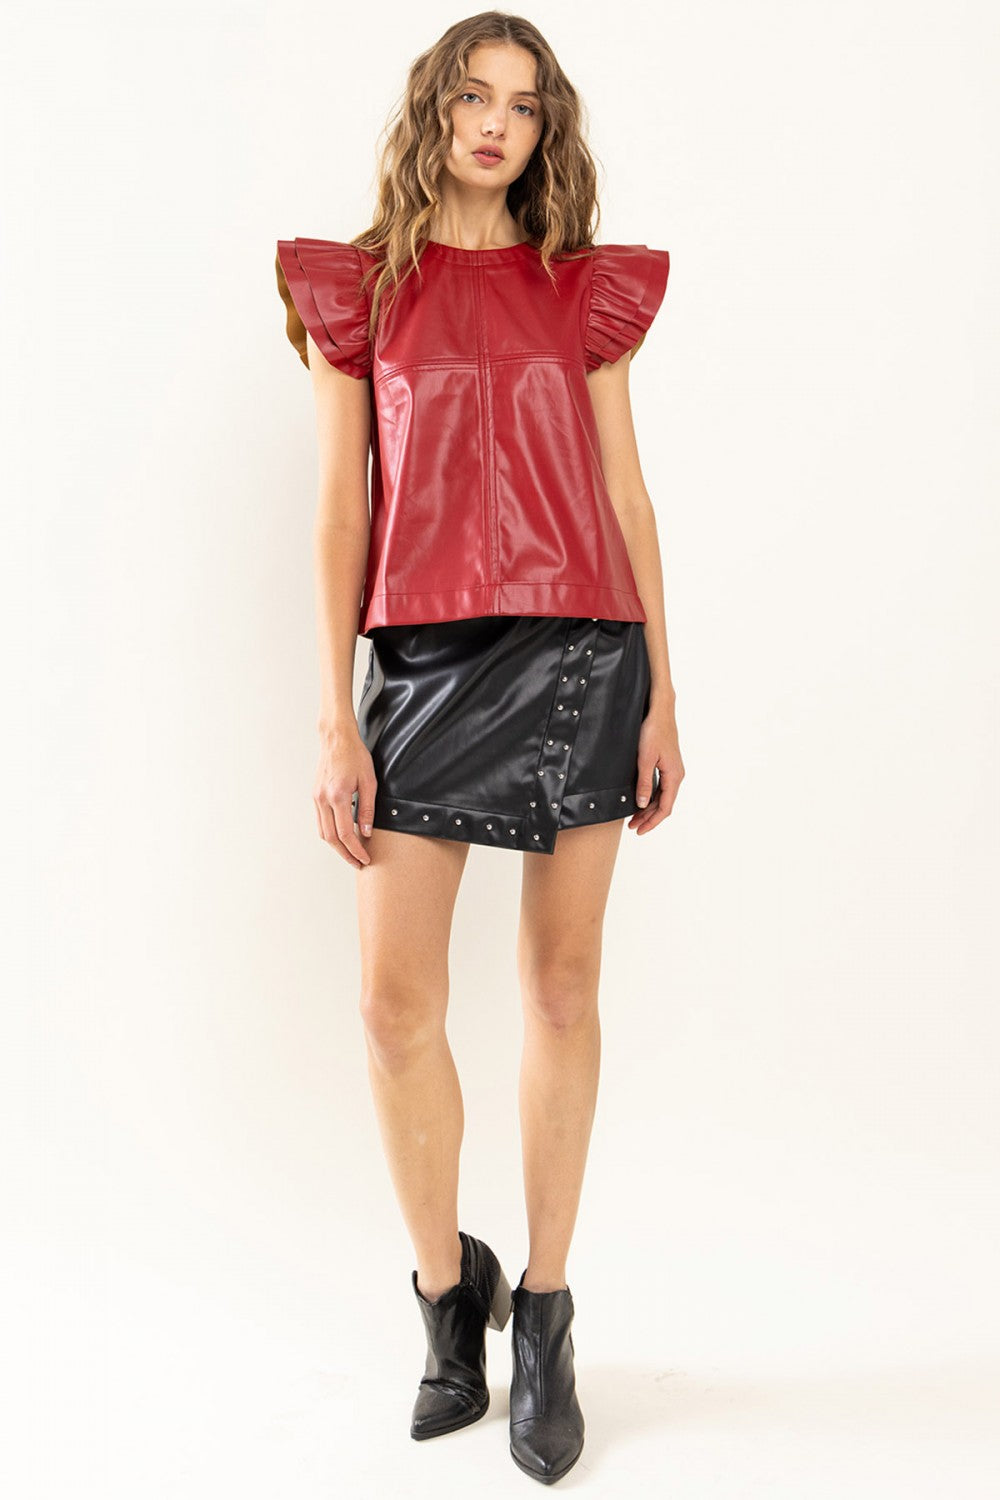 "Marla" Faux Leather Ruffle Sleeve Top - Burgundy